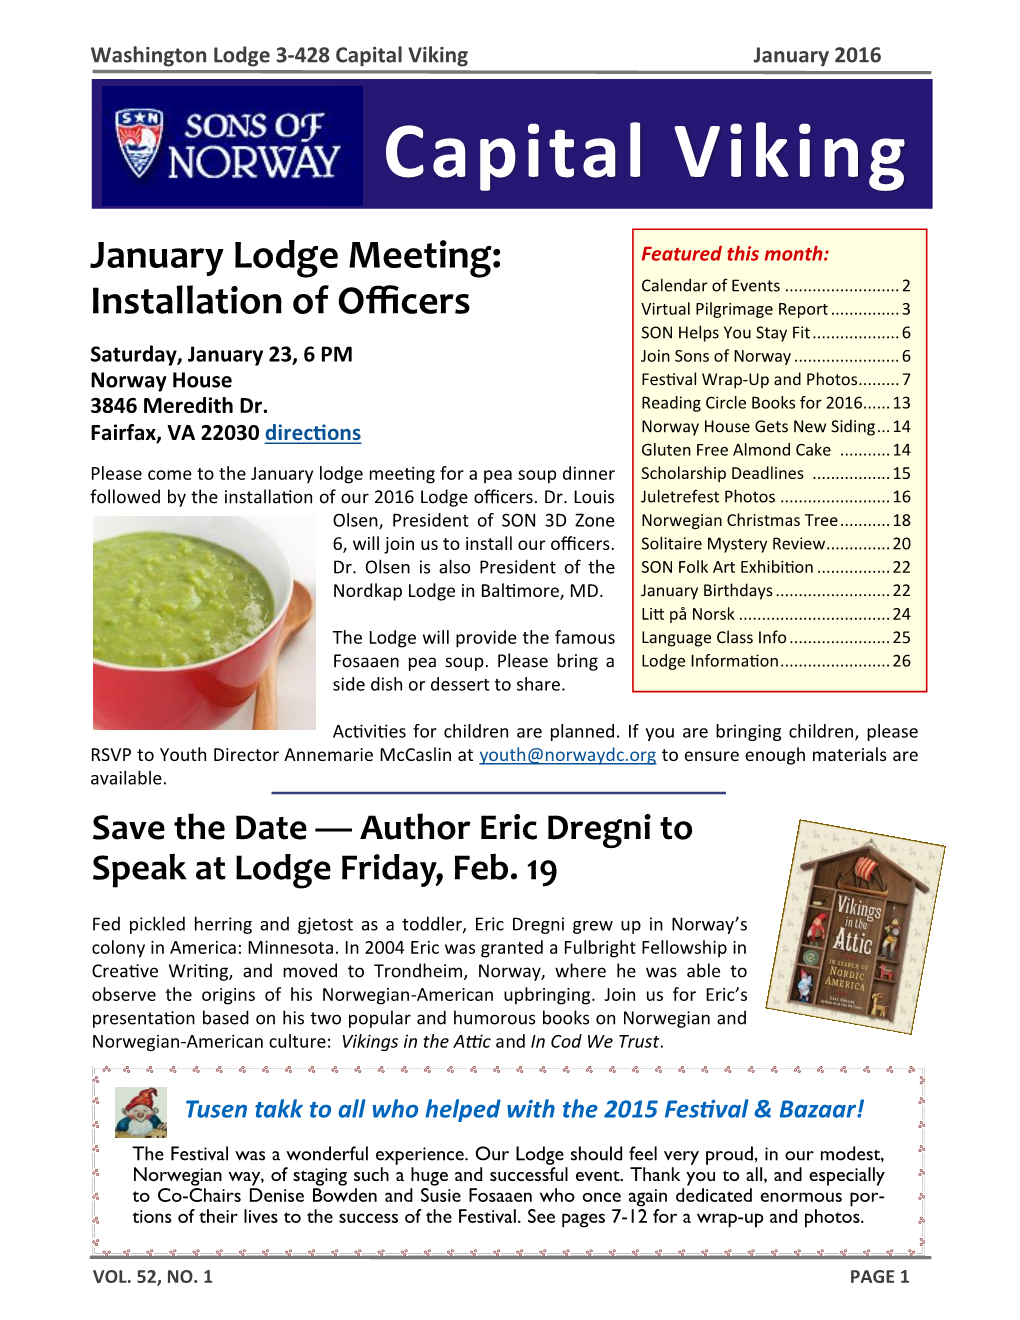 Capital Viking January 2016 Capital Viking